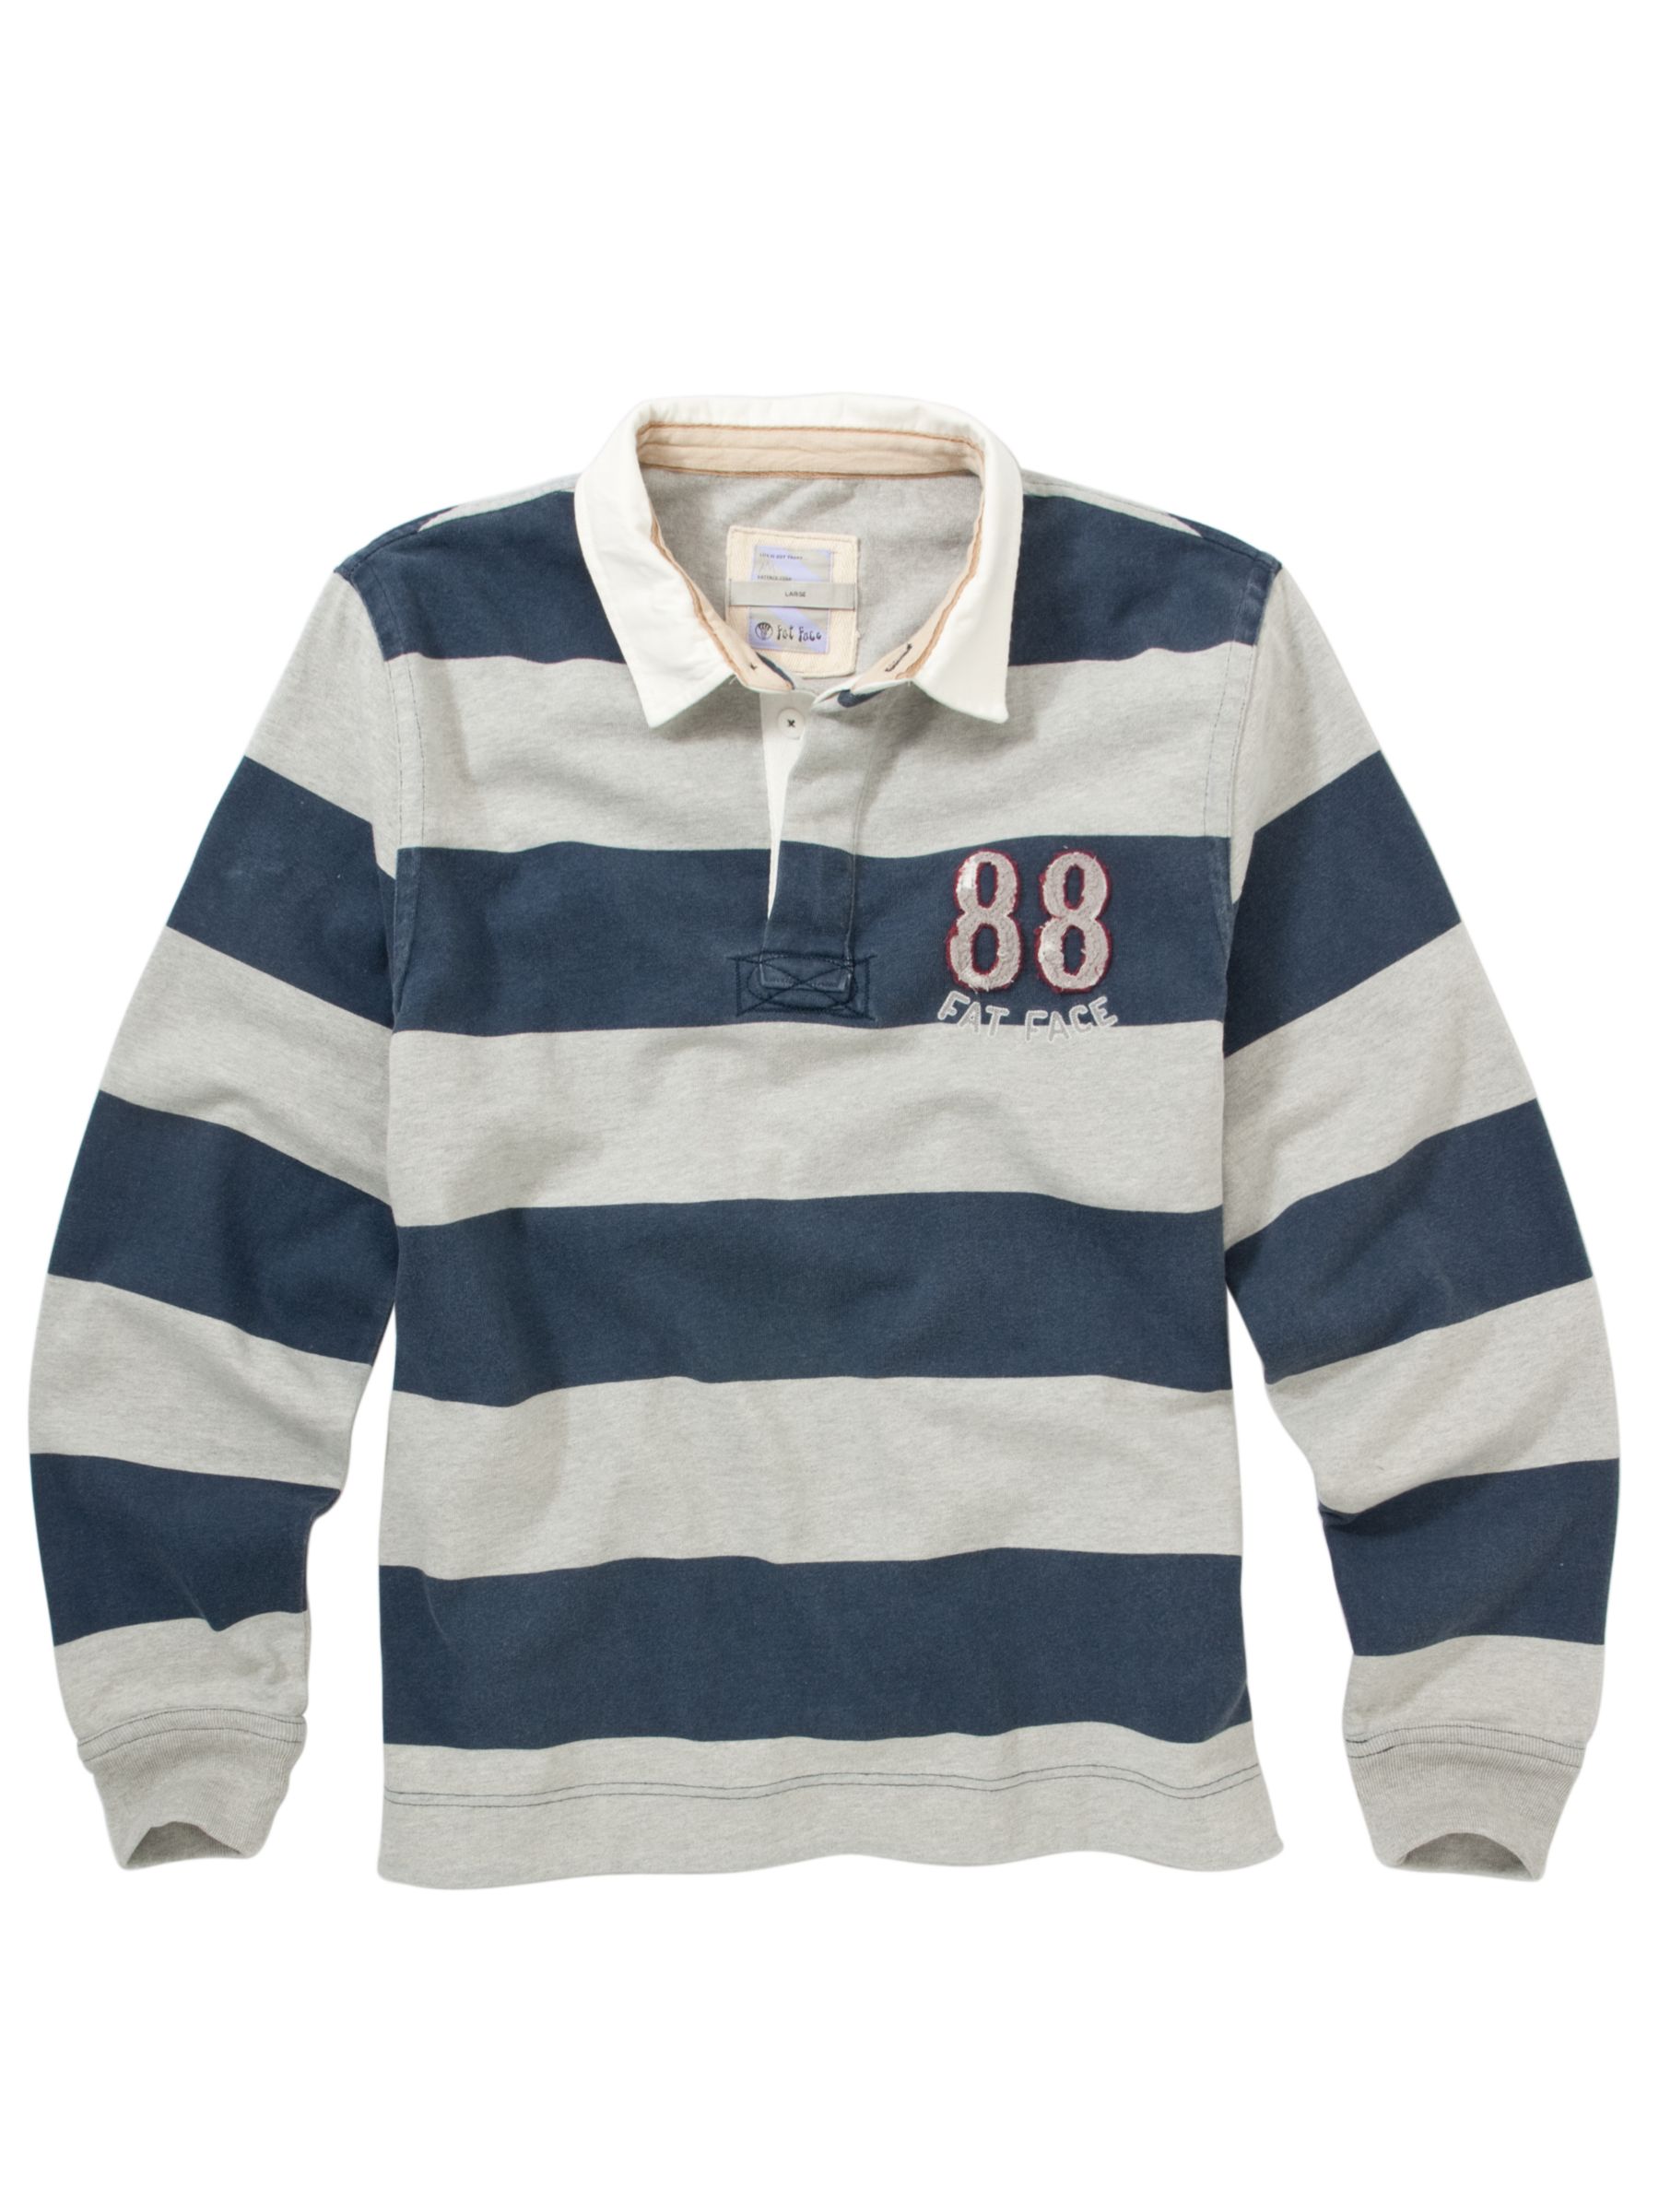 Fat Face Classic Stripe Rugby Shirt, Blue